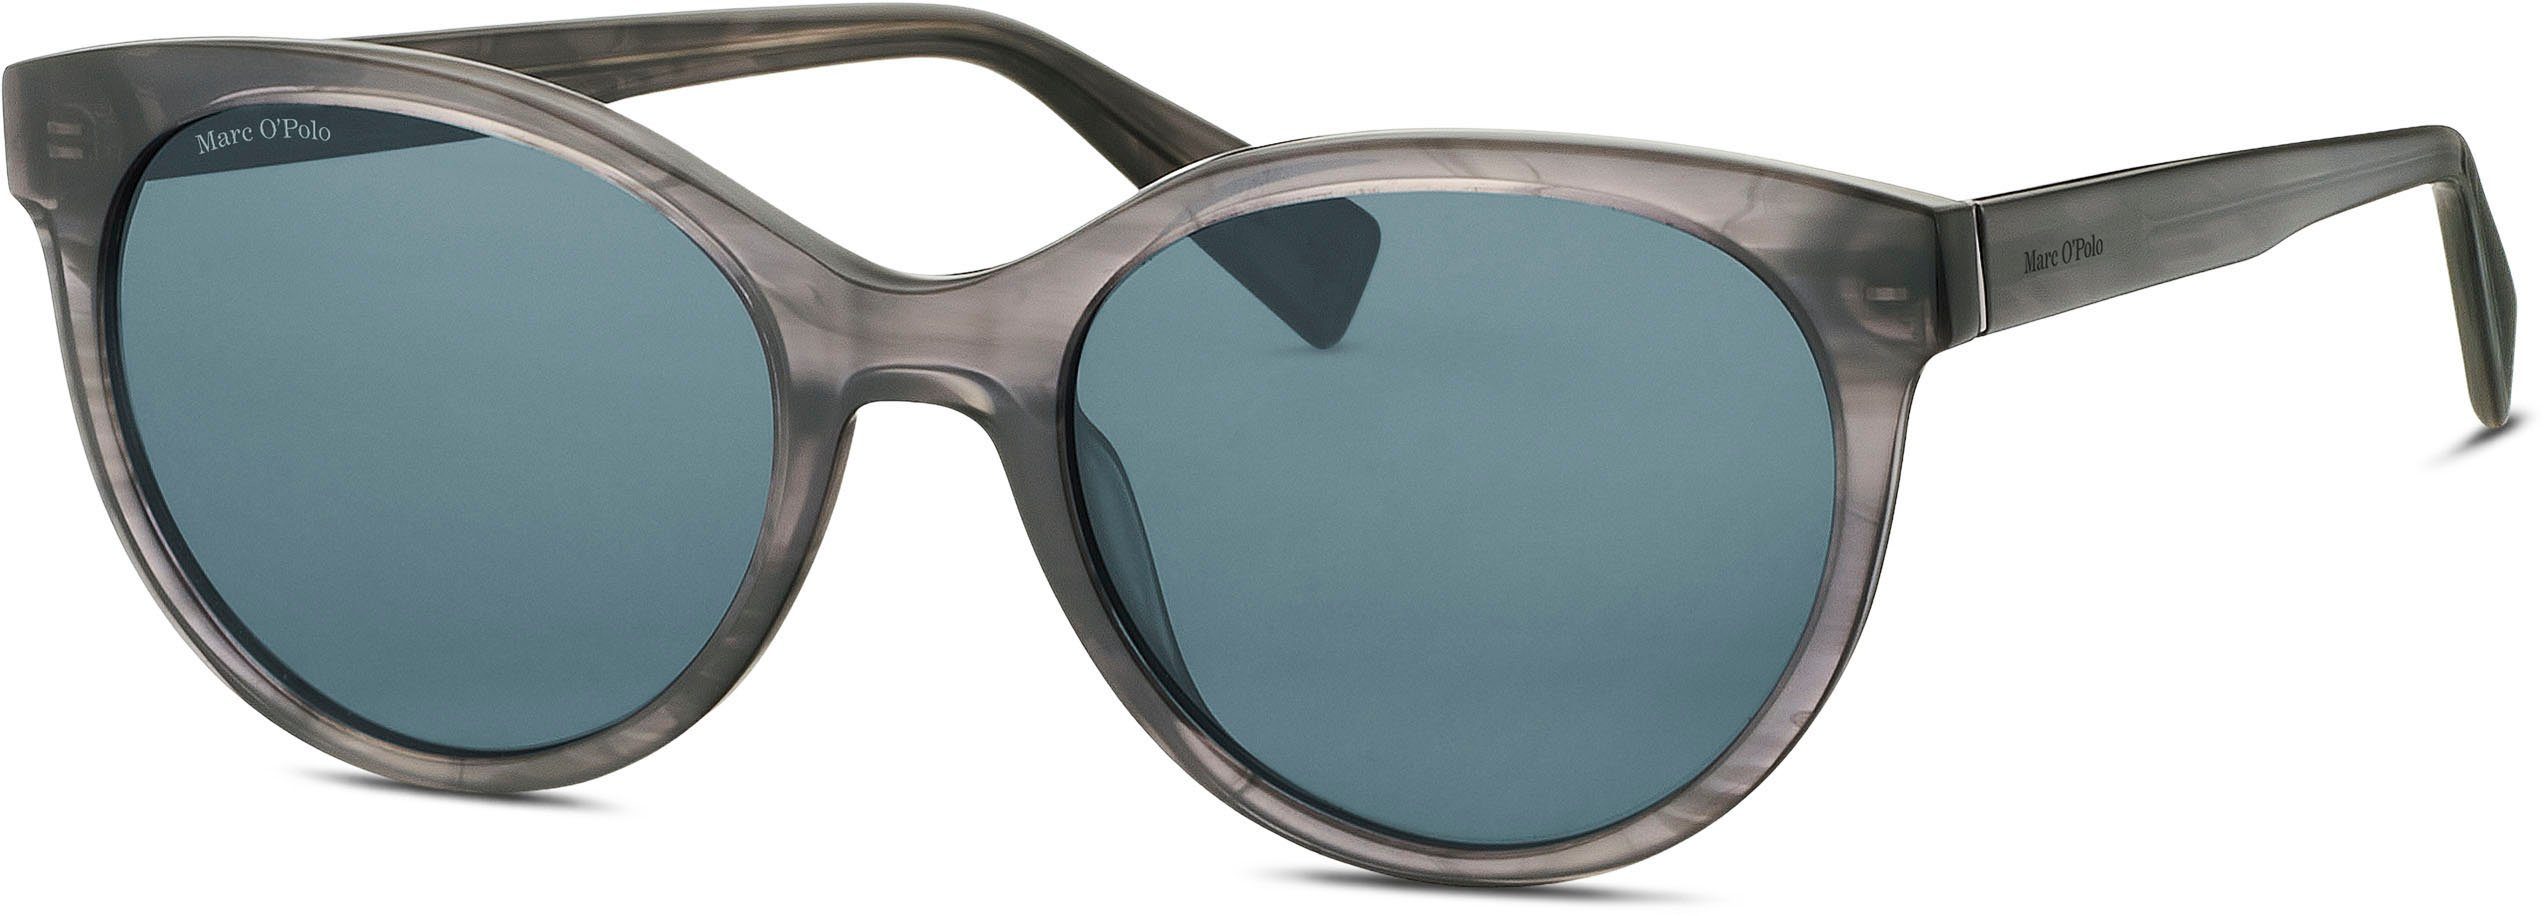 Marc O'Polo Sonnenbrille Modell 506193 grau